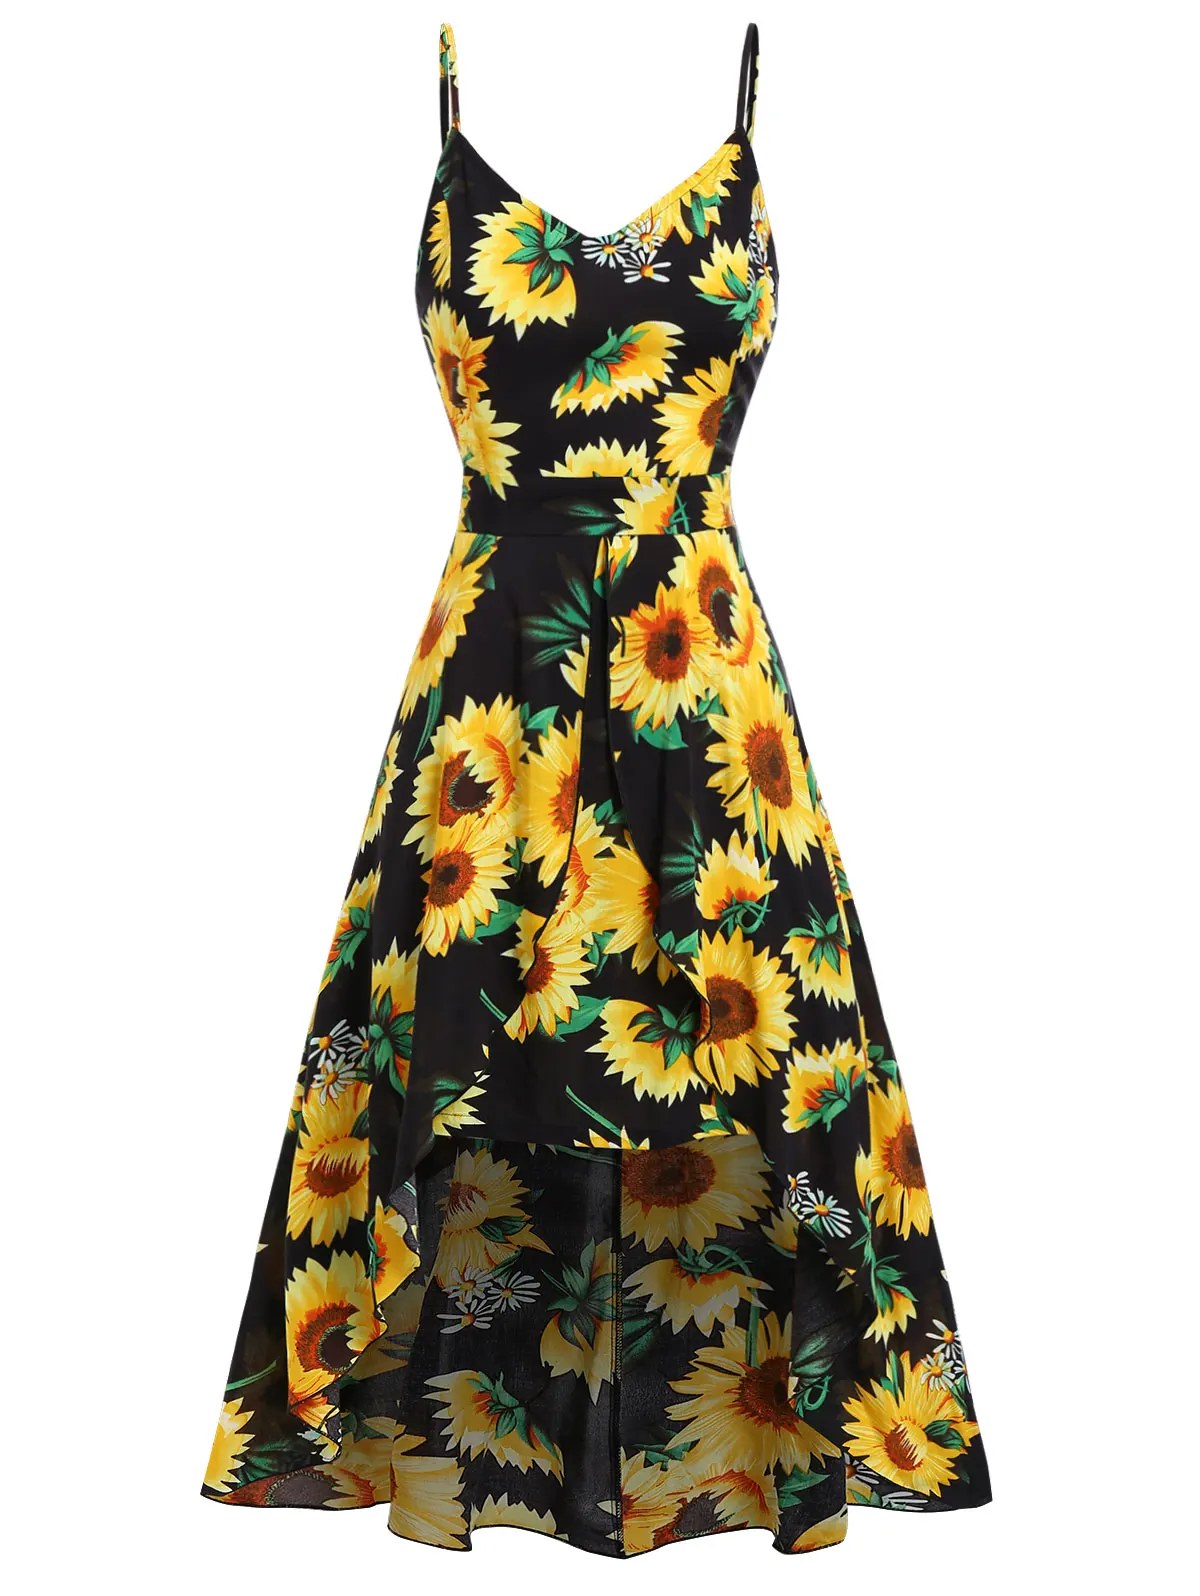 sunflower maxi dress plus size